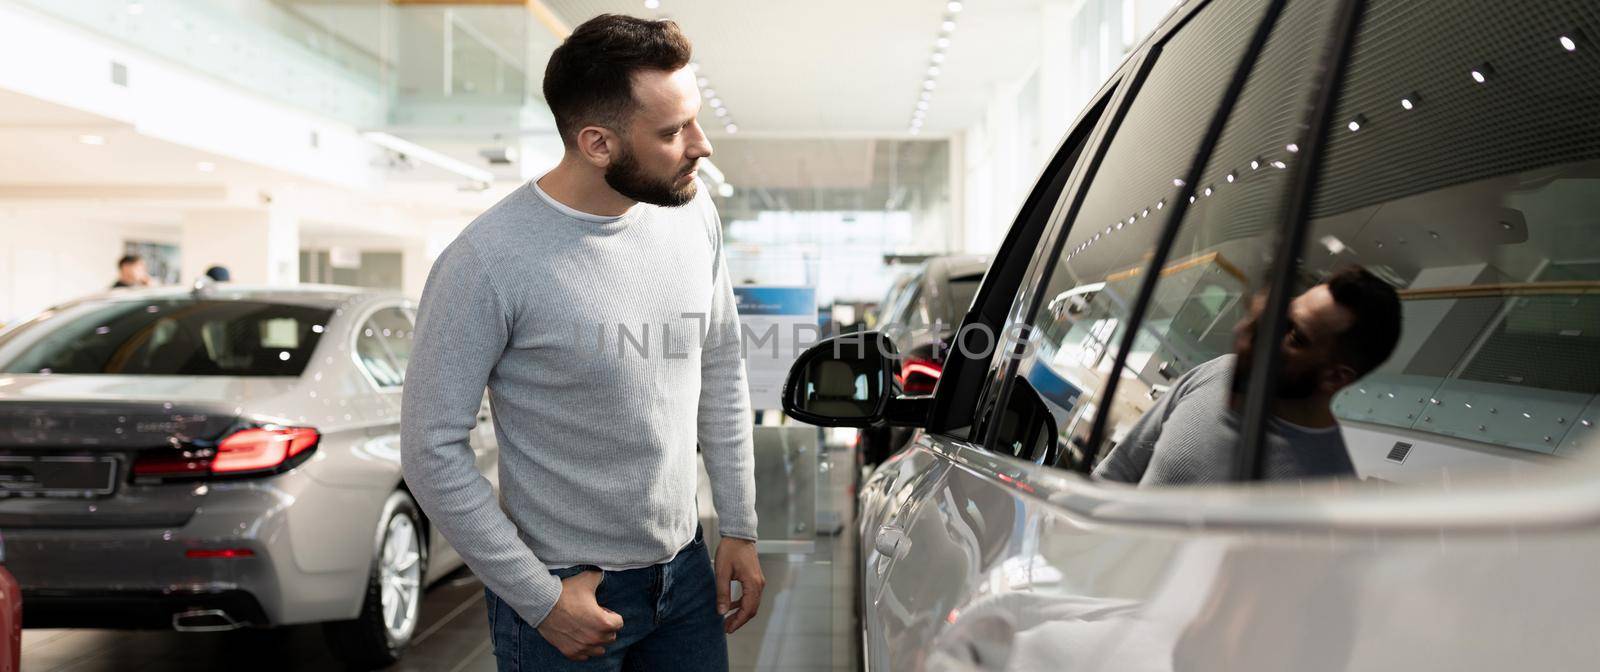 young man chooses a new car in a premium car dealership.